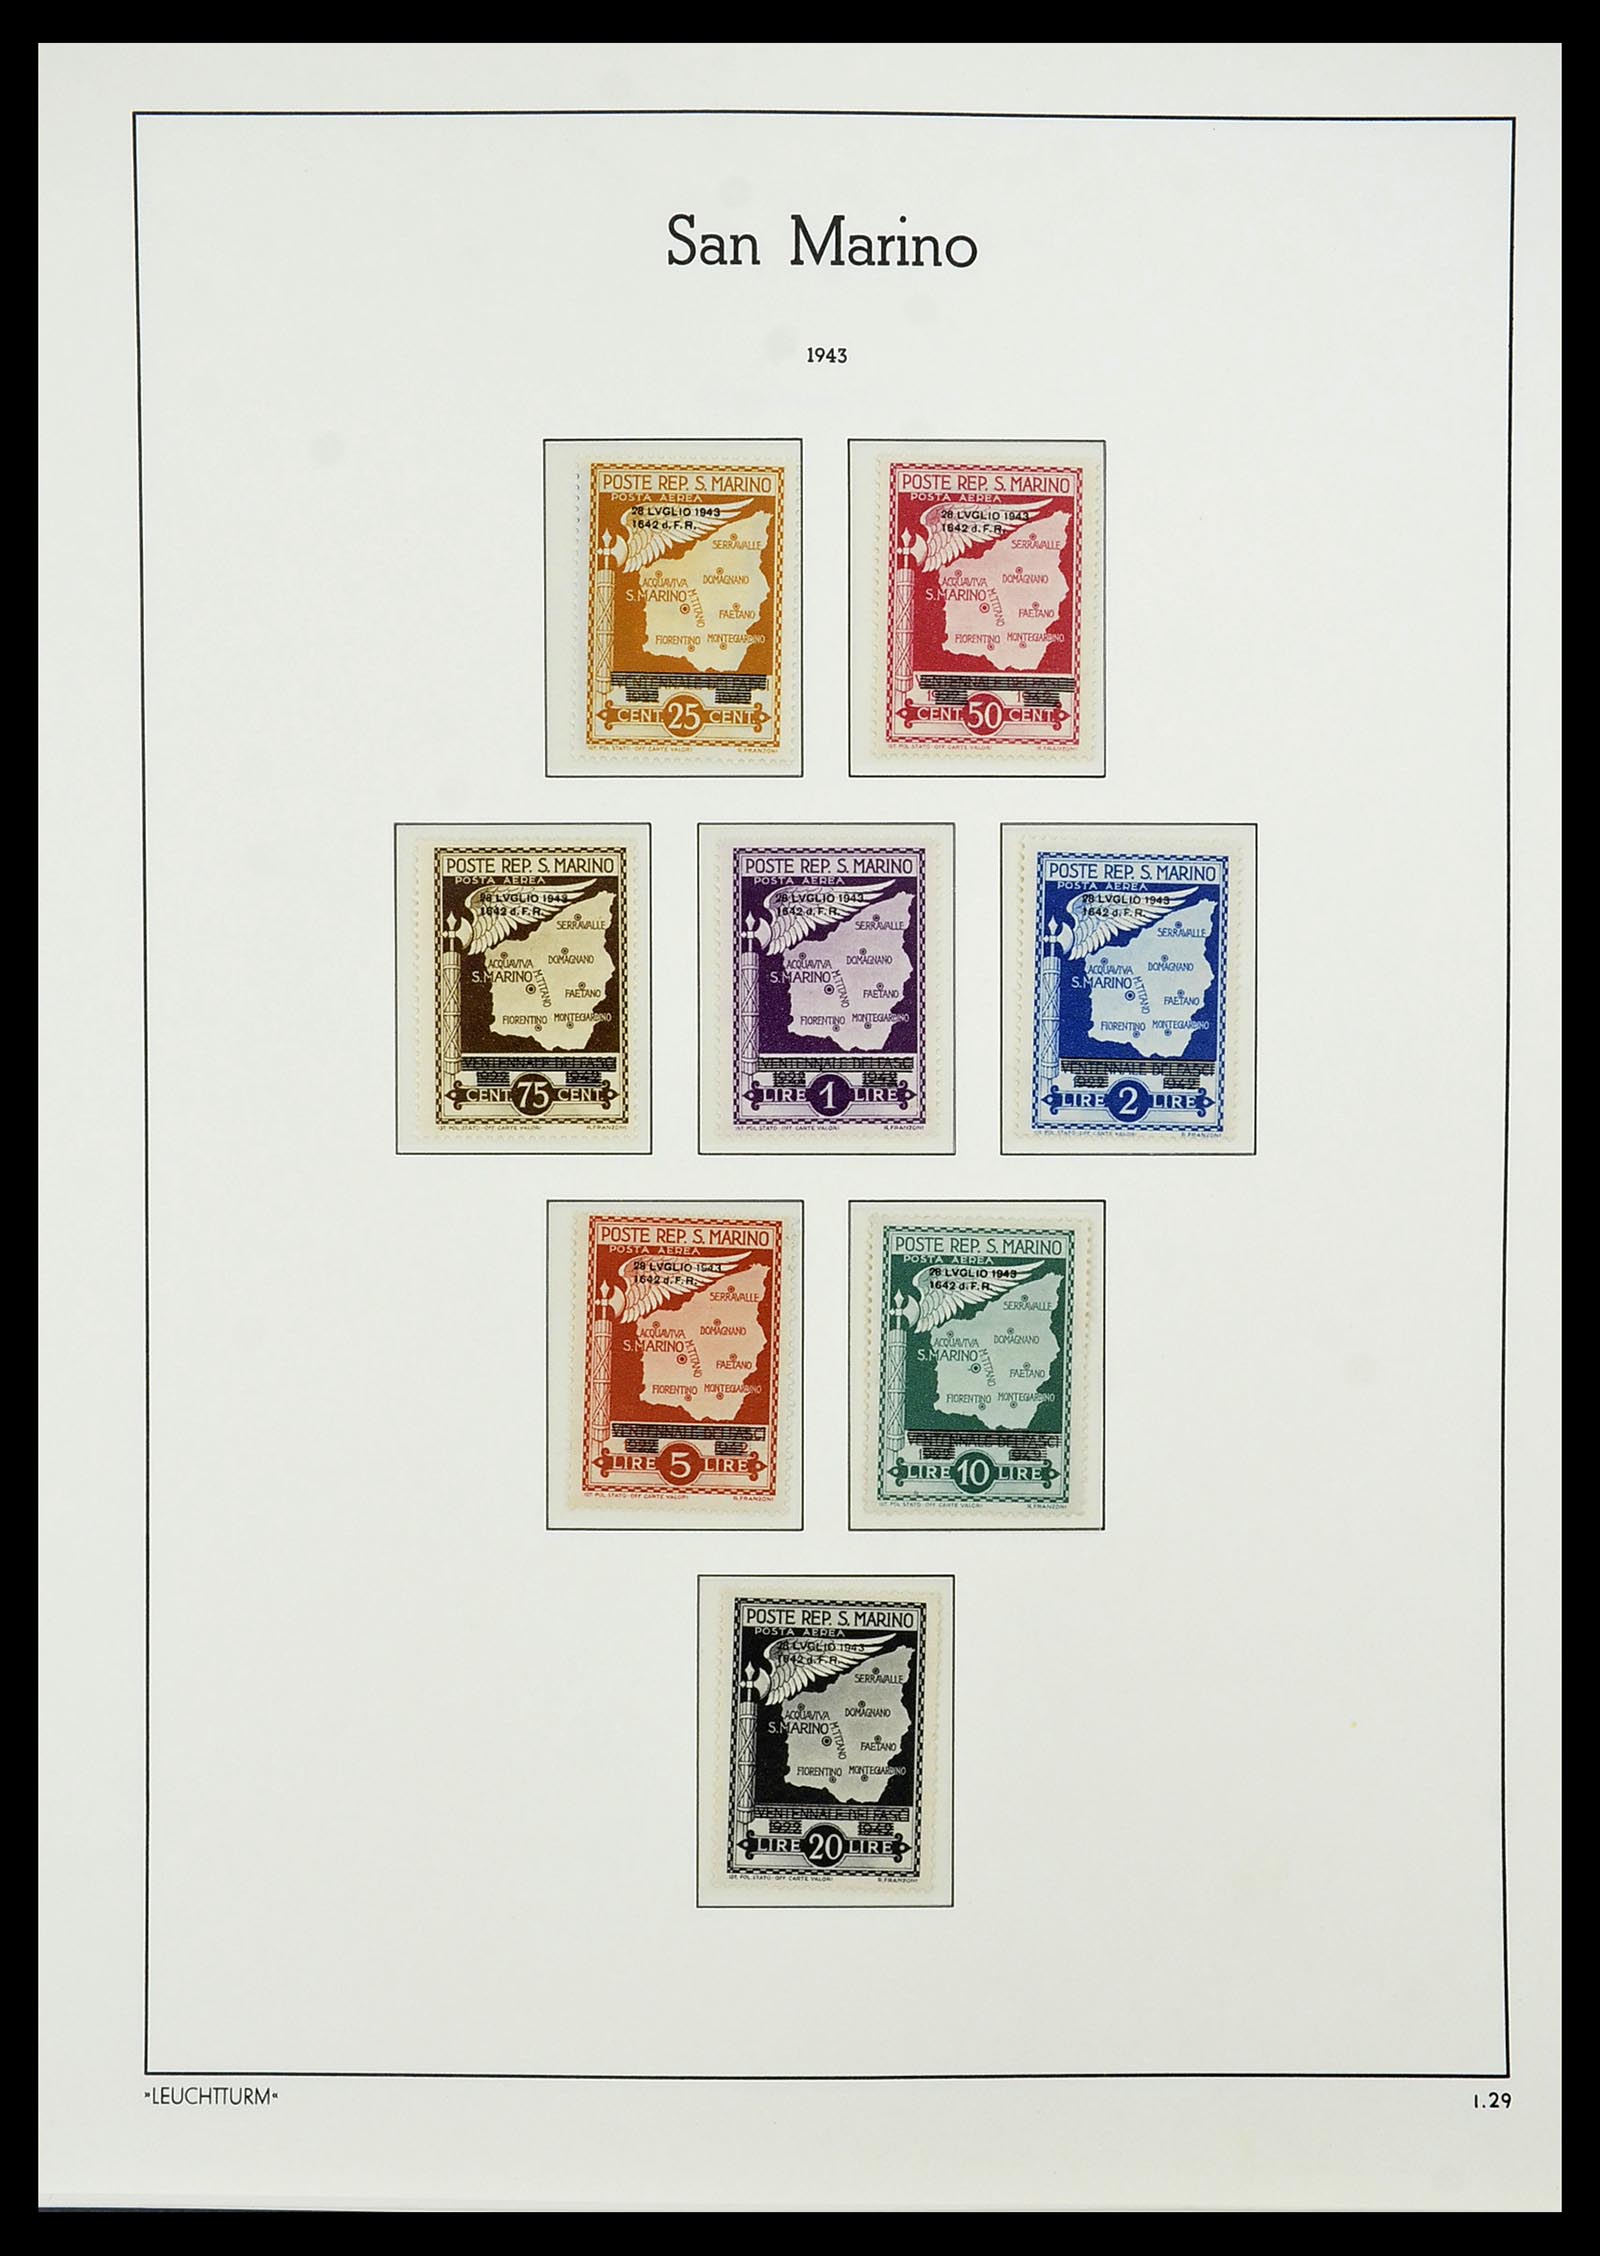 34243 031 - Stamp collection 34243 San Marino 1877-2008.